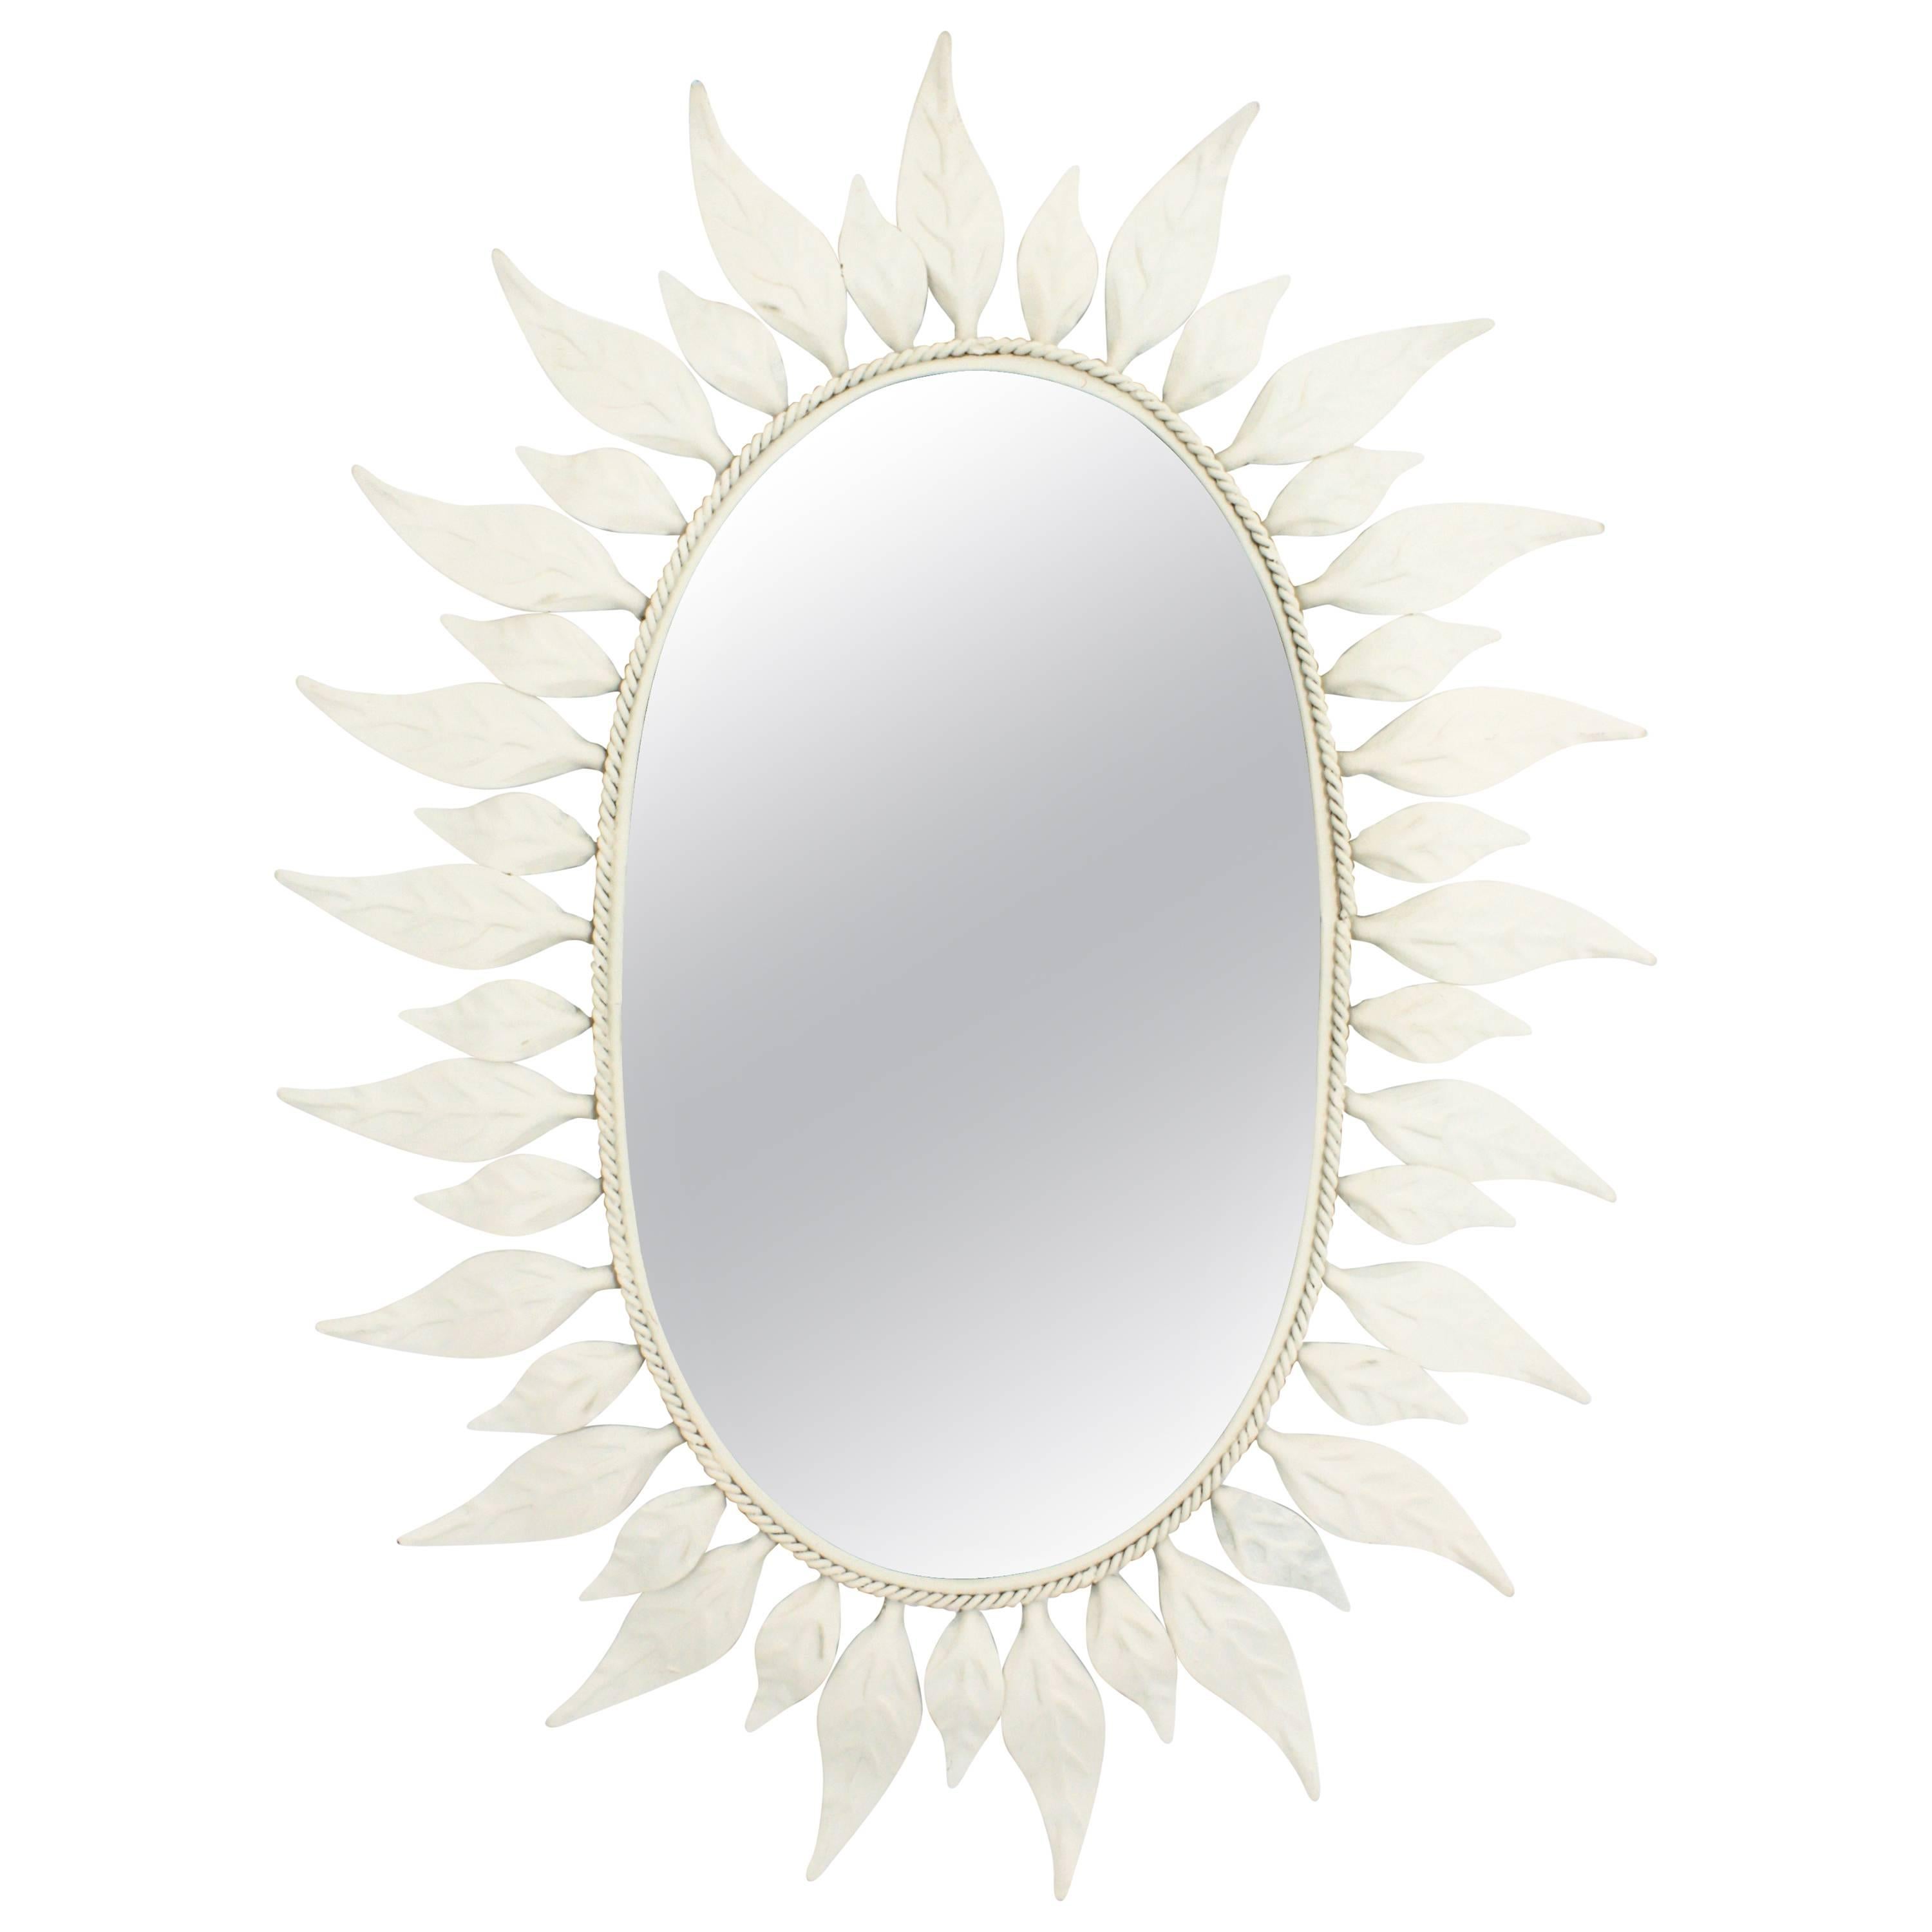 Mediterranean White Painted Iron Sunburst Oval Mirror, Spain, 1960s